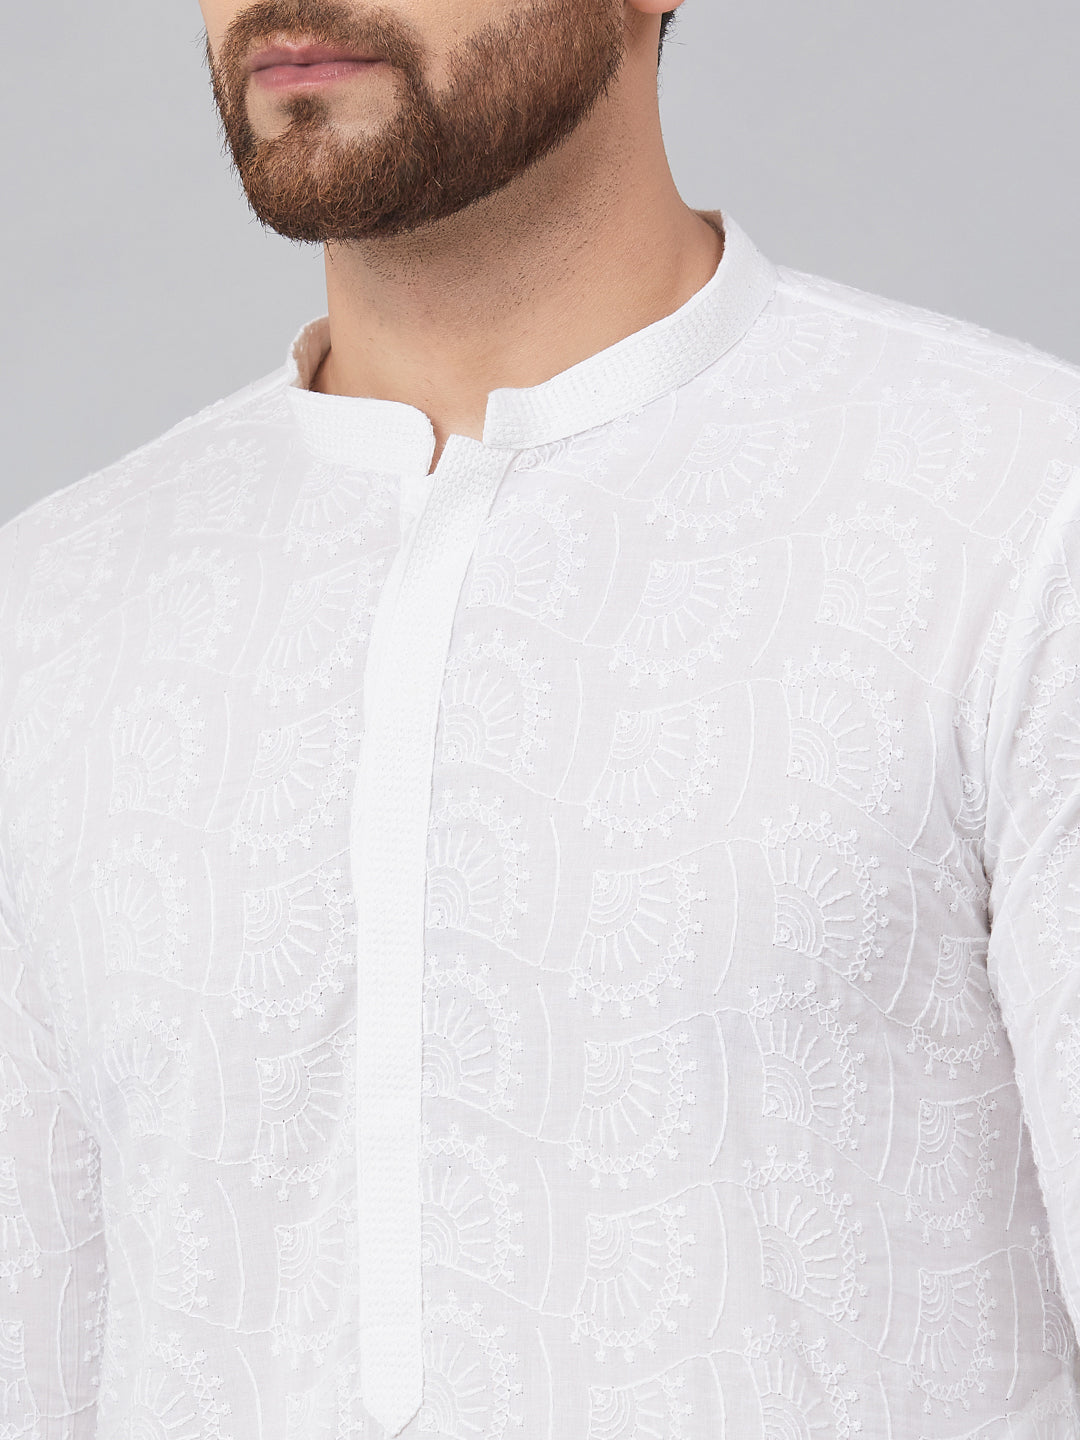 Buy Men's White Cotton Chikankari Embroidered Kurta Pajama Set Online - Zoom Out